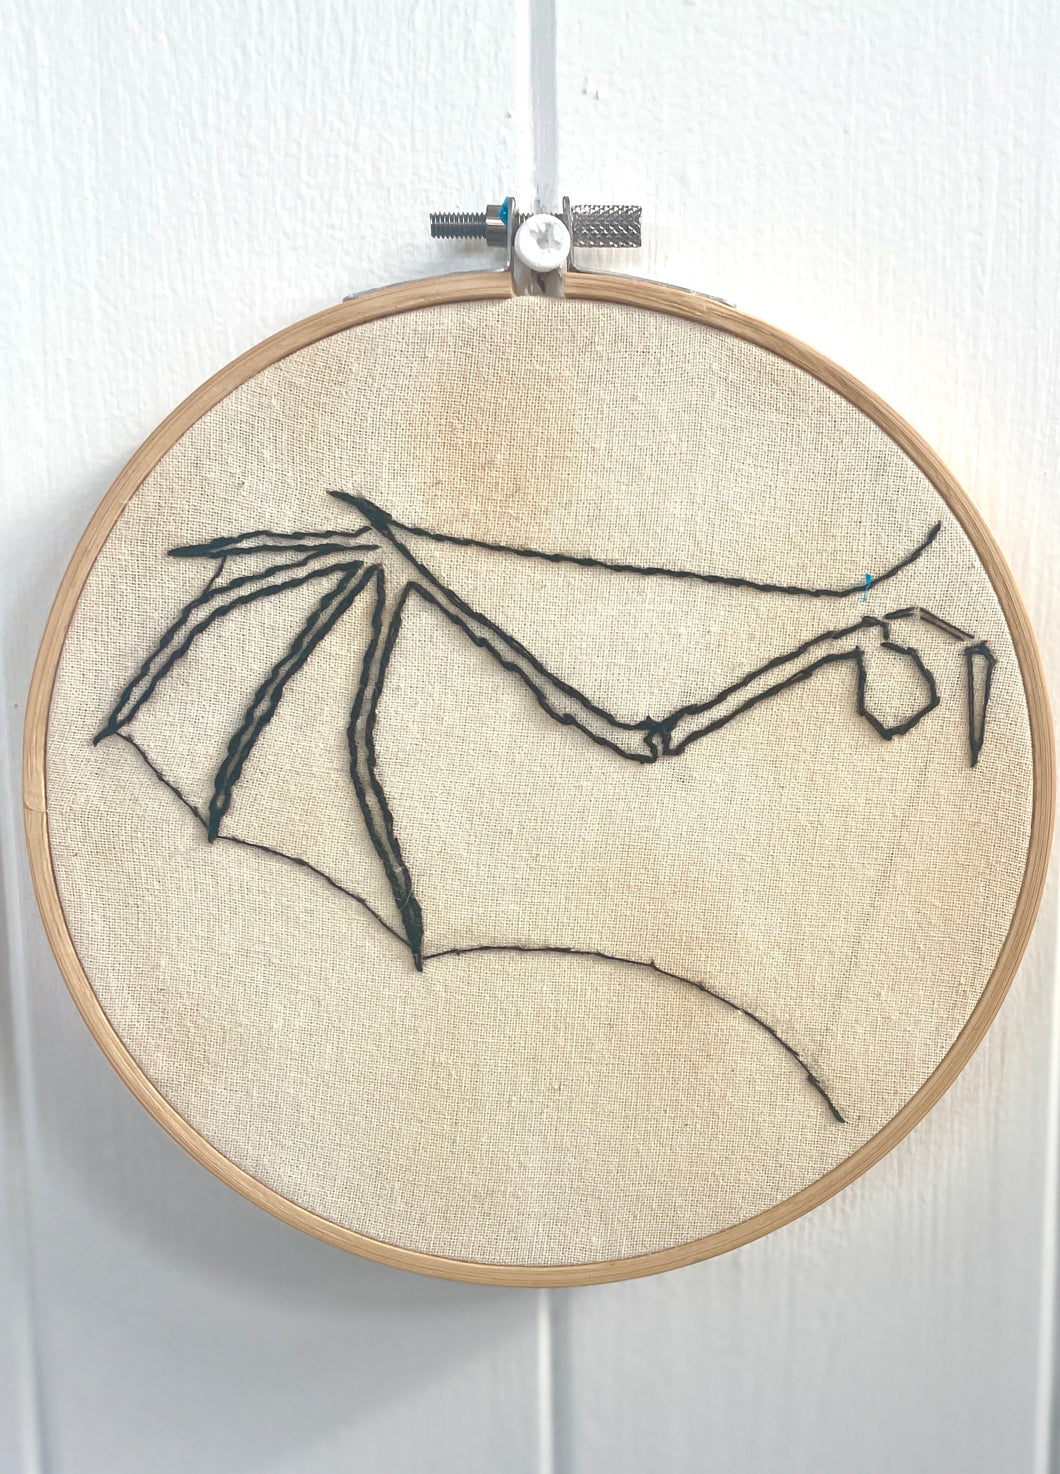 Bat Wing Embroidery, Bat Anatomy Hoop Art Embroidery